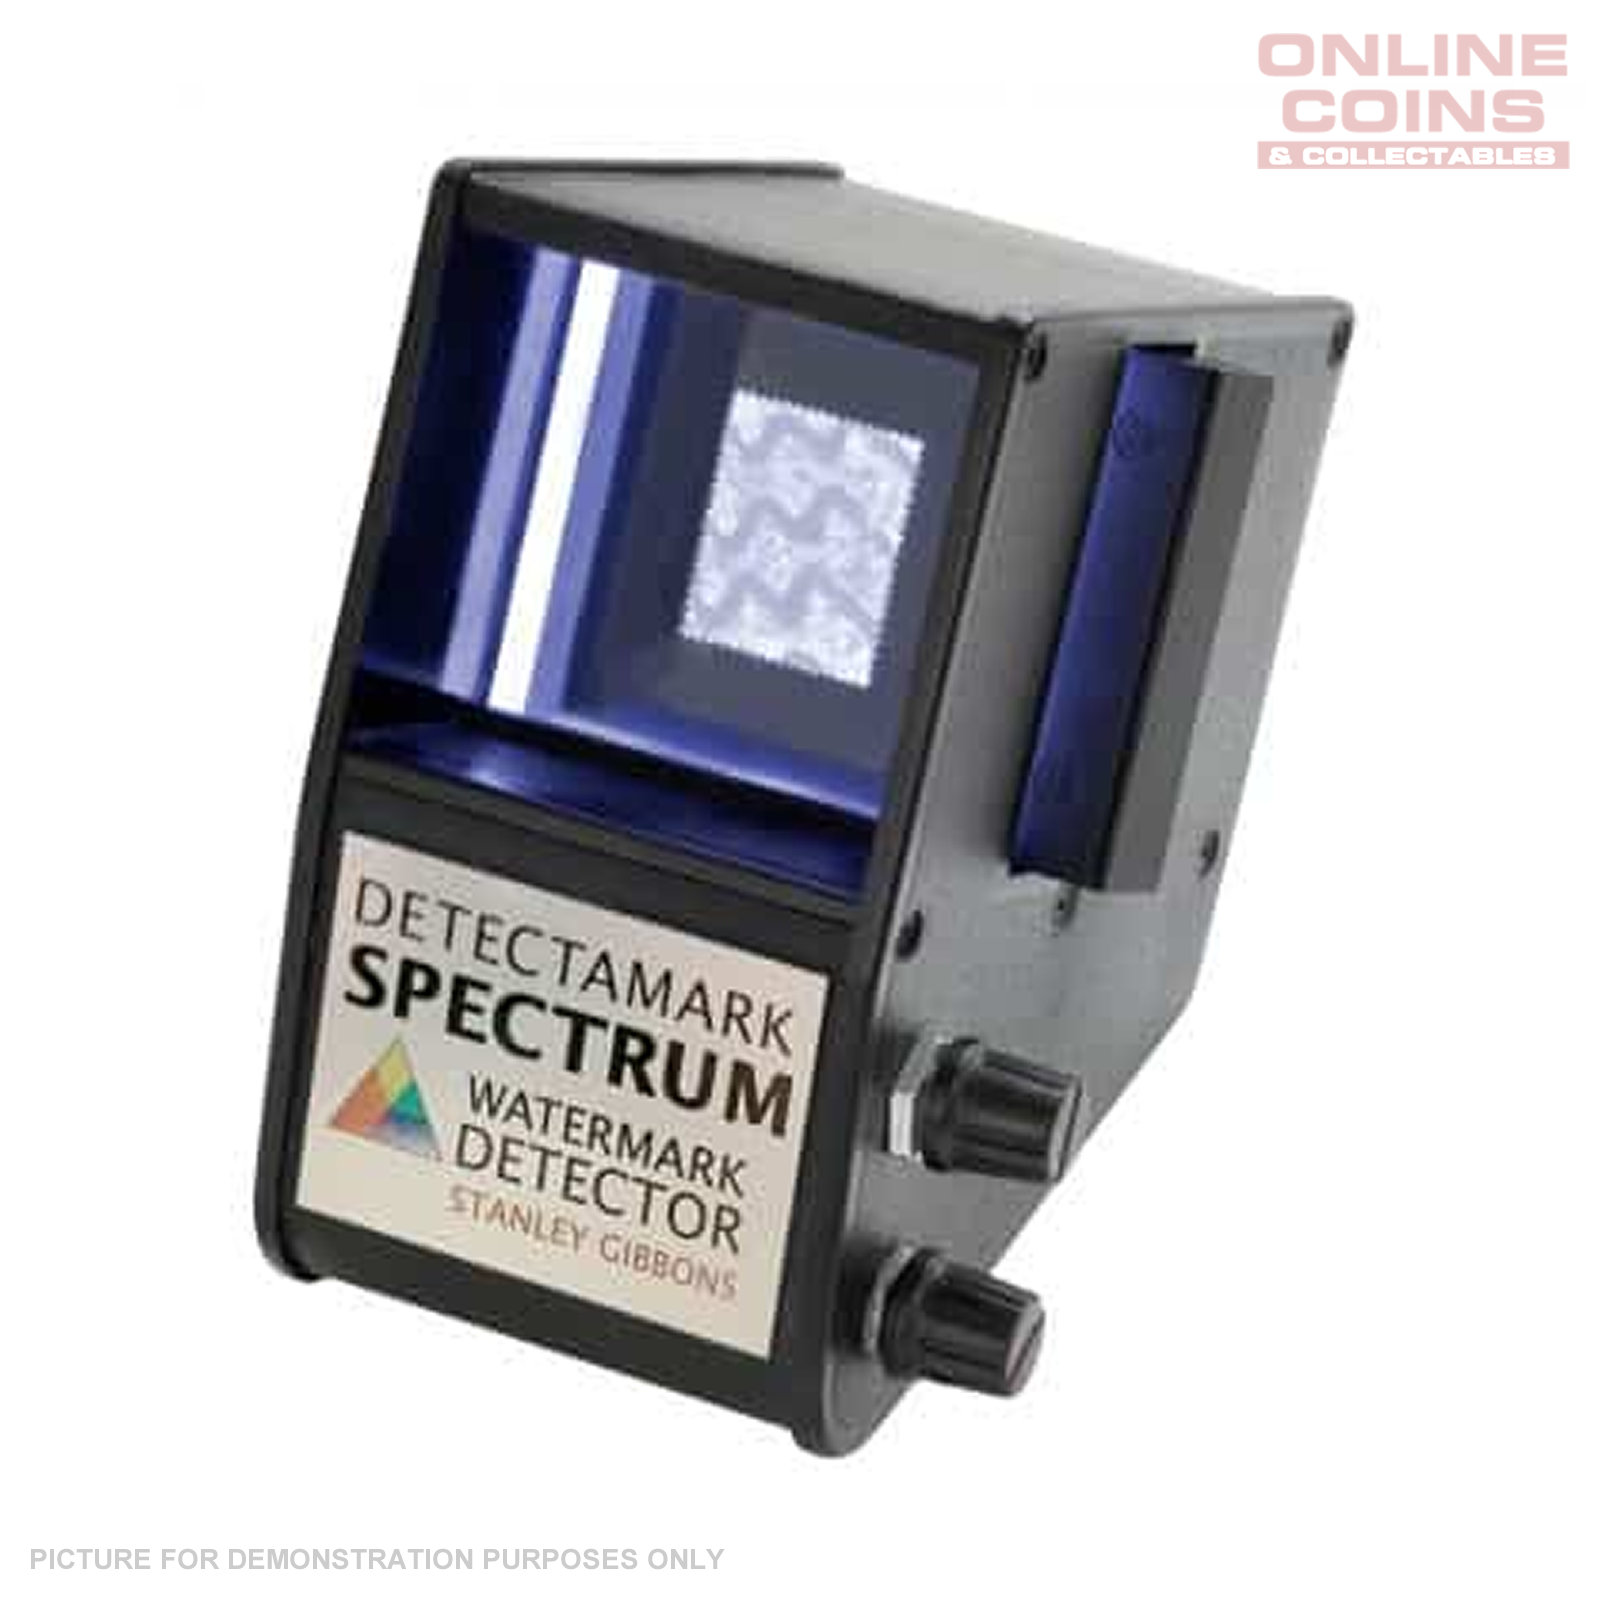 Stanley Gibbons Detectamark Spectrum Watermark Detector